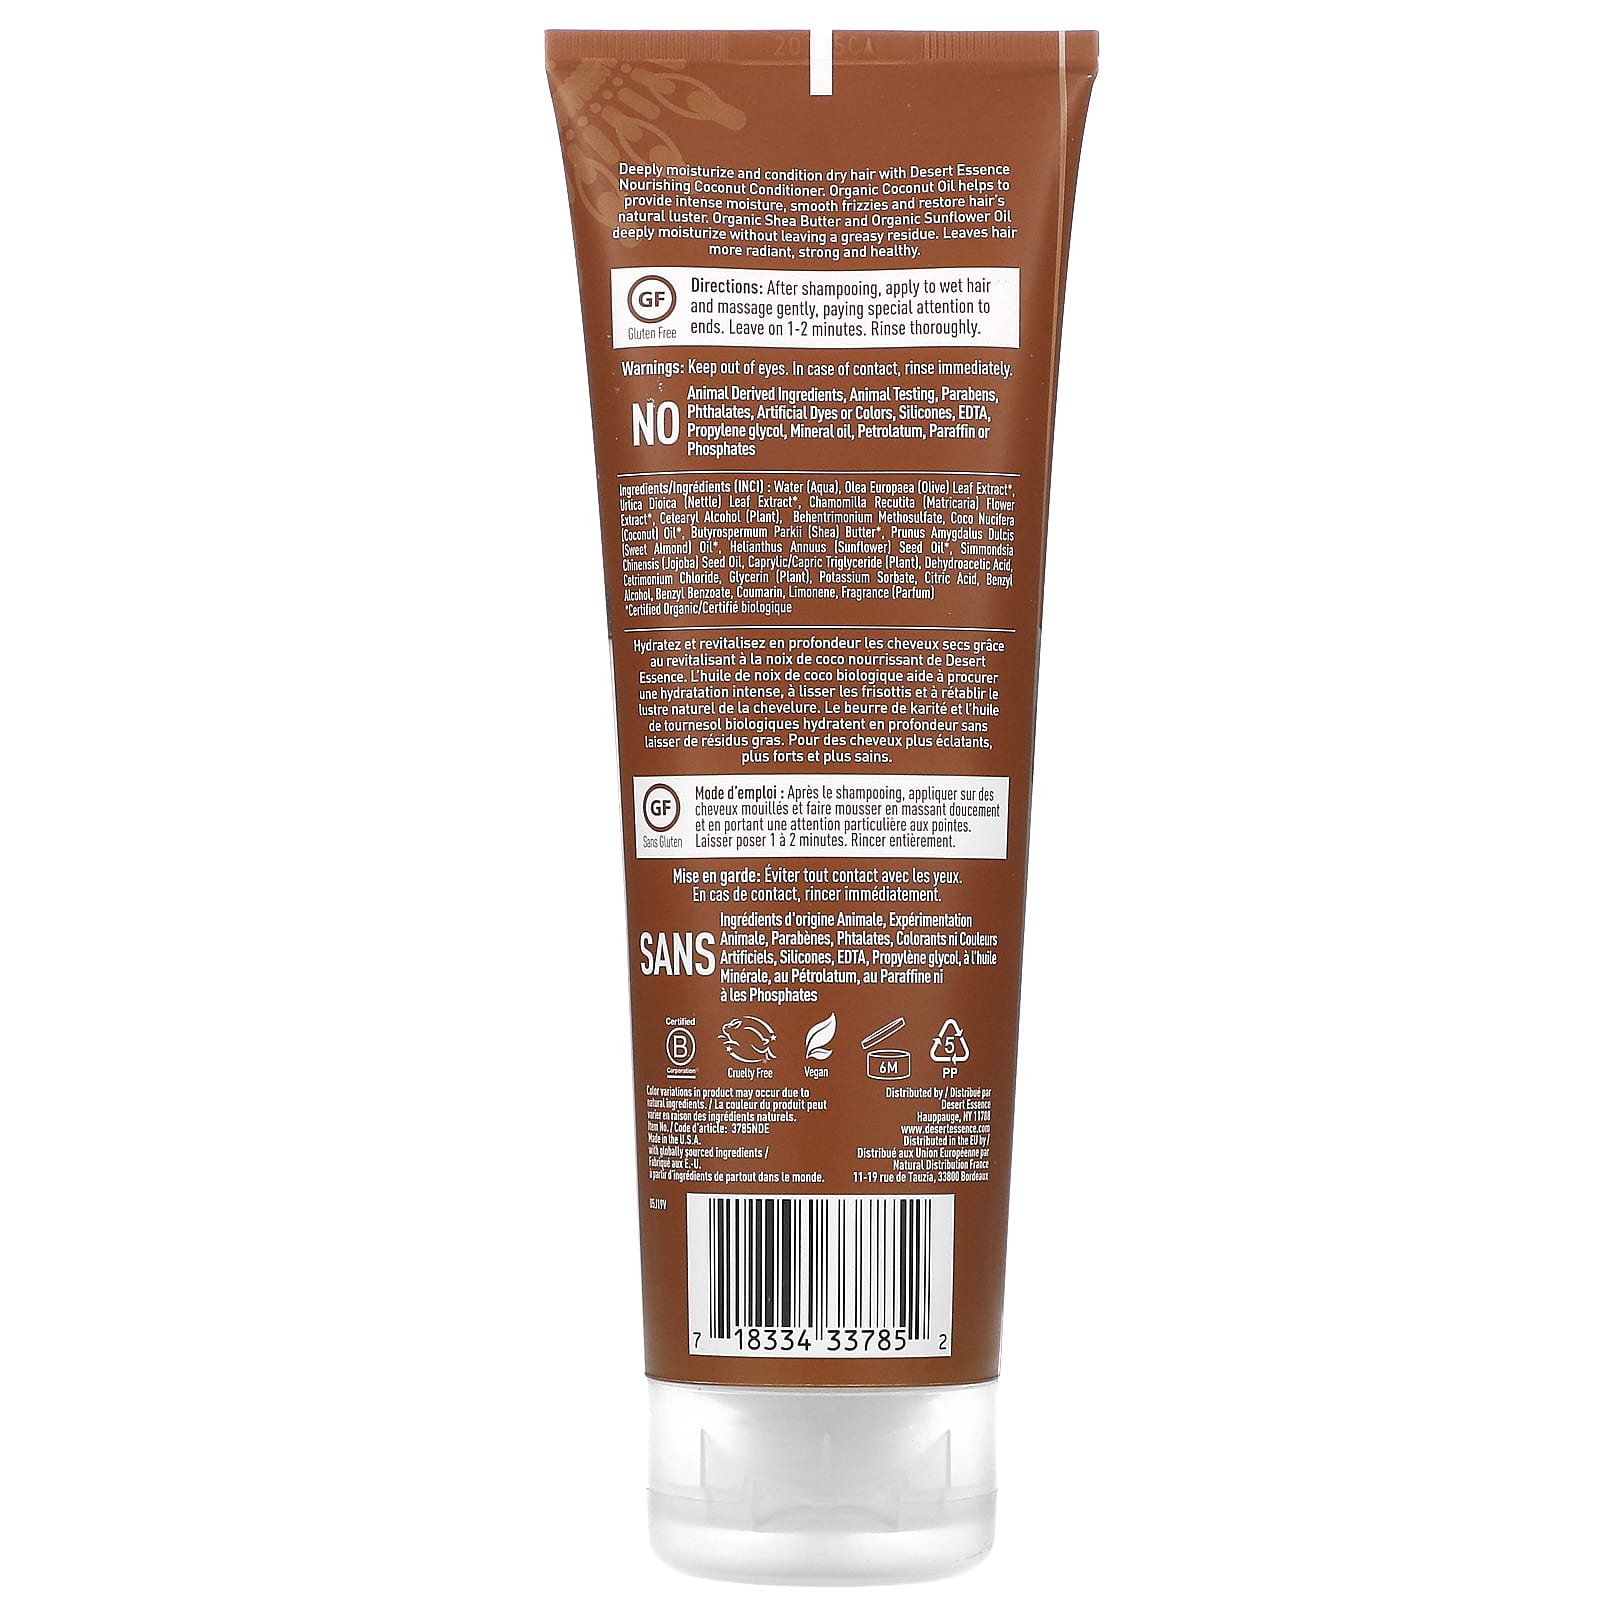 Desert Essence Conditioner Coconut oil smoothness enhancer - 8 fl oz (237 ml)